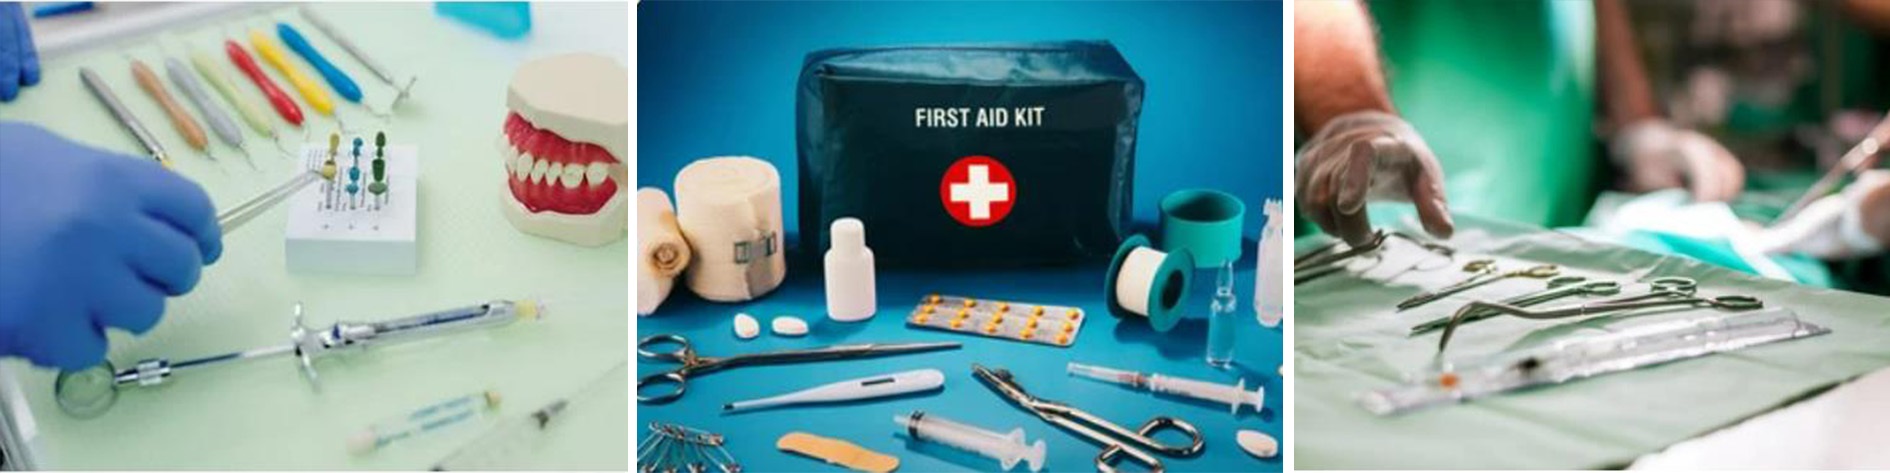 Medical kits.jpg